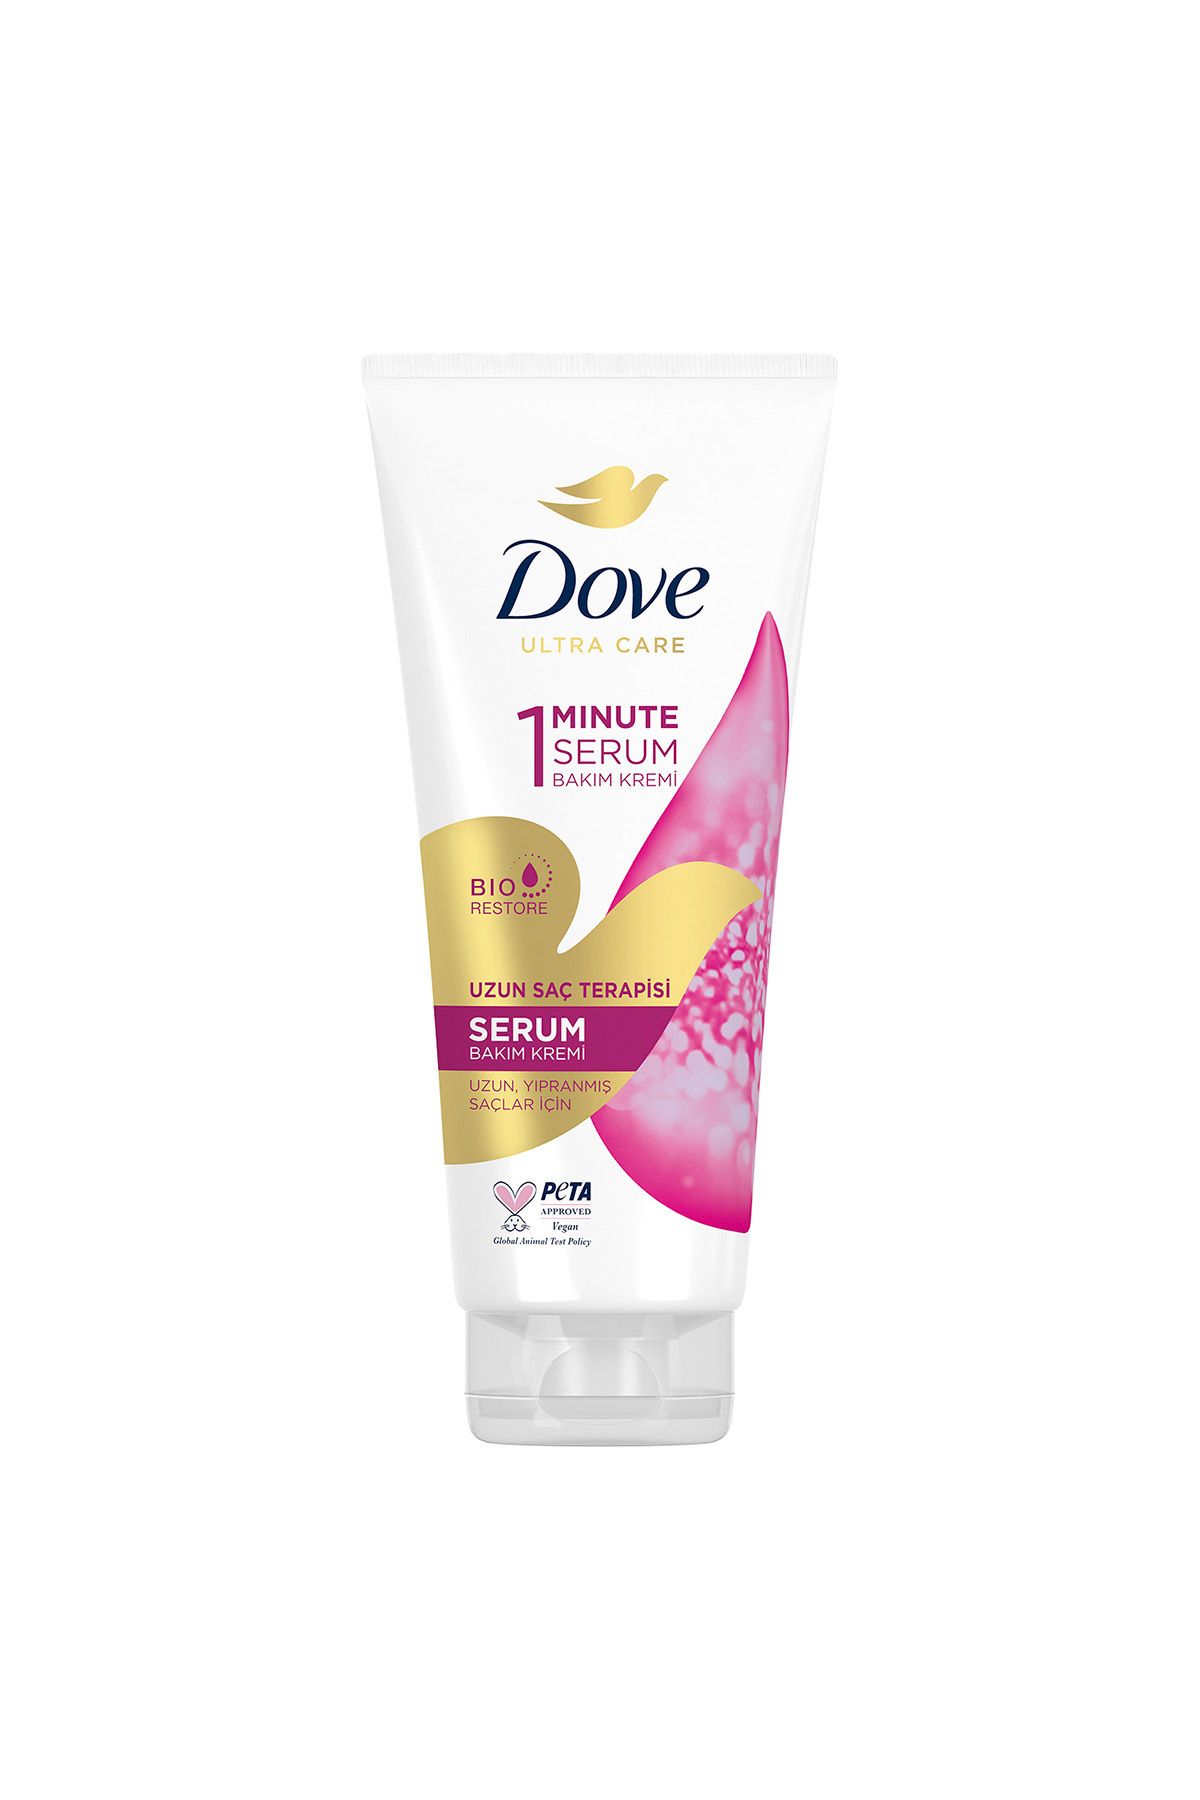 Dove Ultra Care 1 Minute Serum Saç Bakım Kremi Uzun Saç Terapisi 170 ml